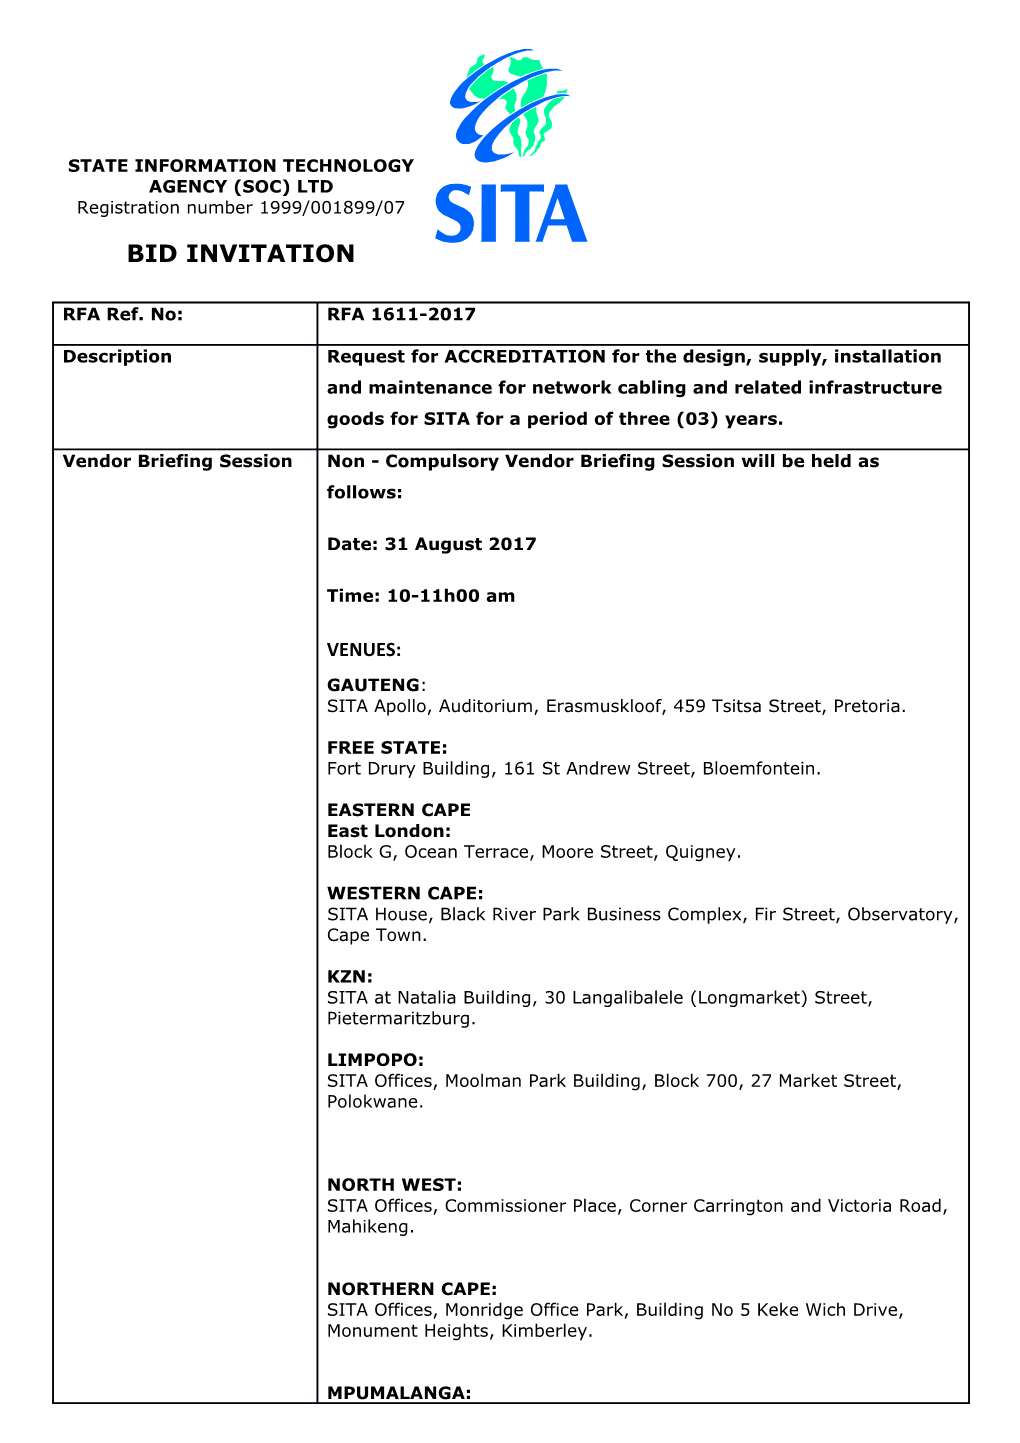 State Information Technology Agency (Soc) Ltd s5